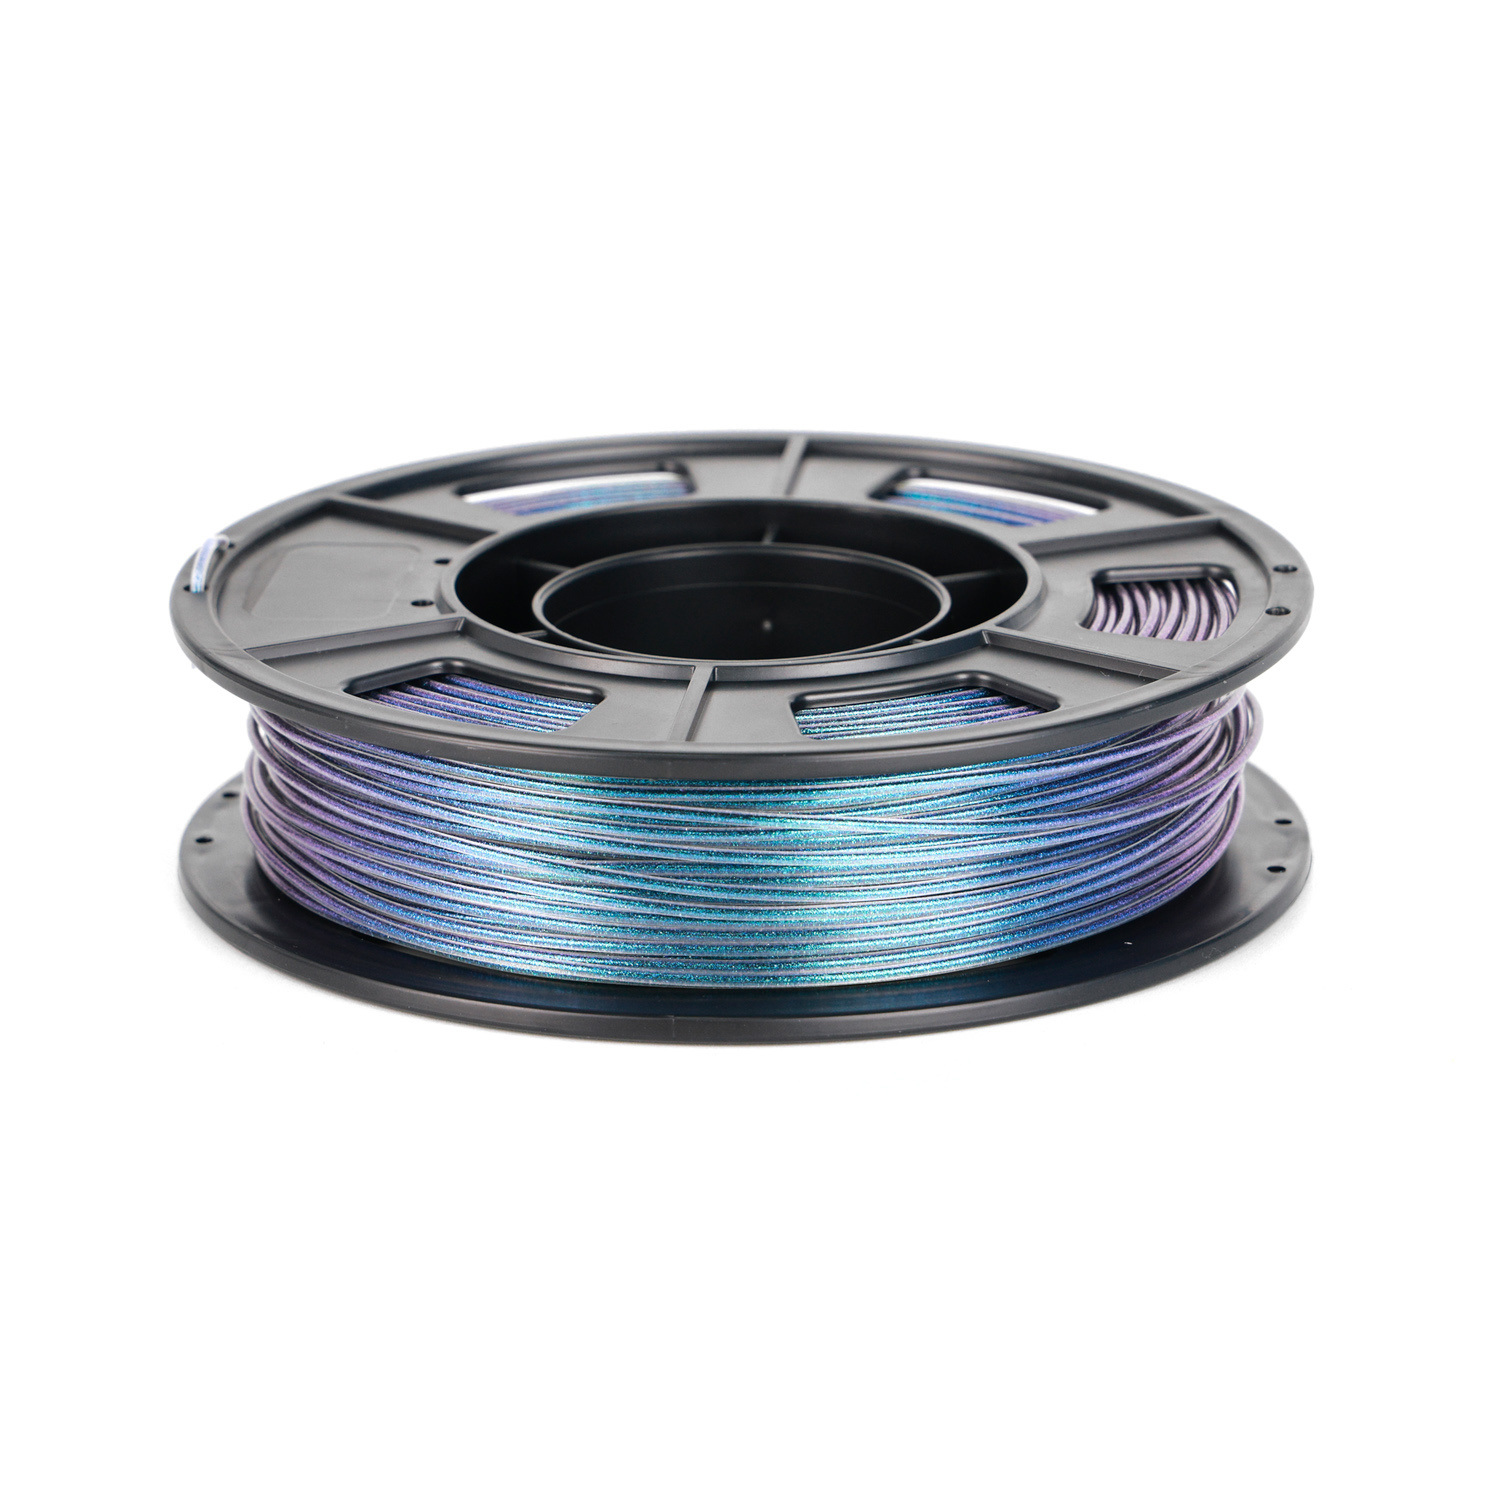 
                Top Rank Shining Colorful 3D Printing Filaments Starry 1.75mm PLA Filament
        